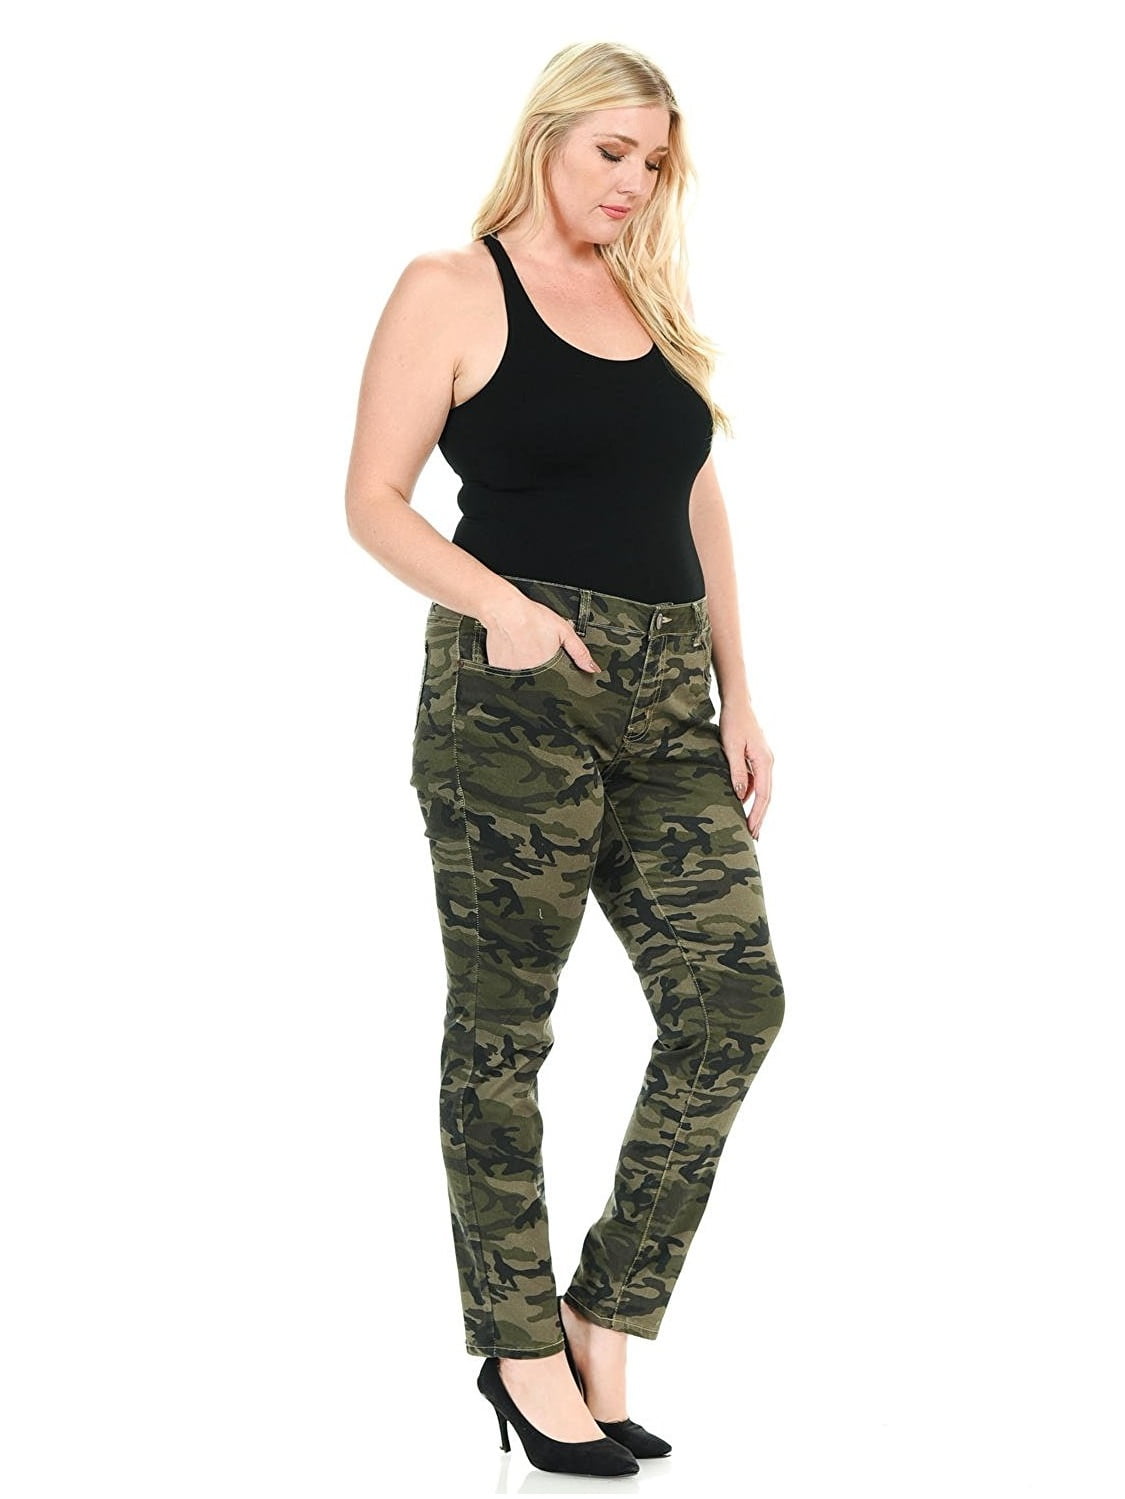 Sweet Look Womens Plus Size Army Style Camo Camouflage Denim Pants - Walmart.com